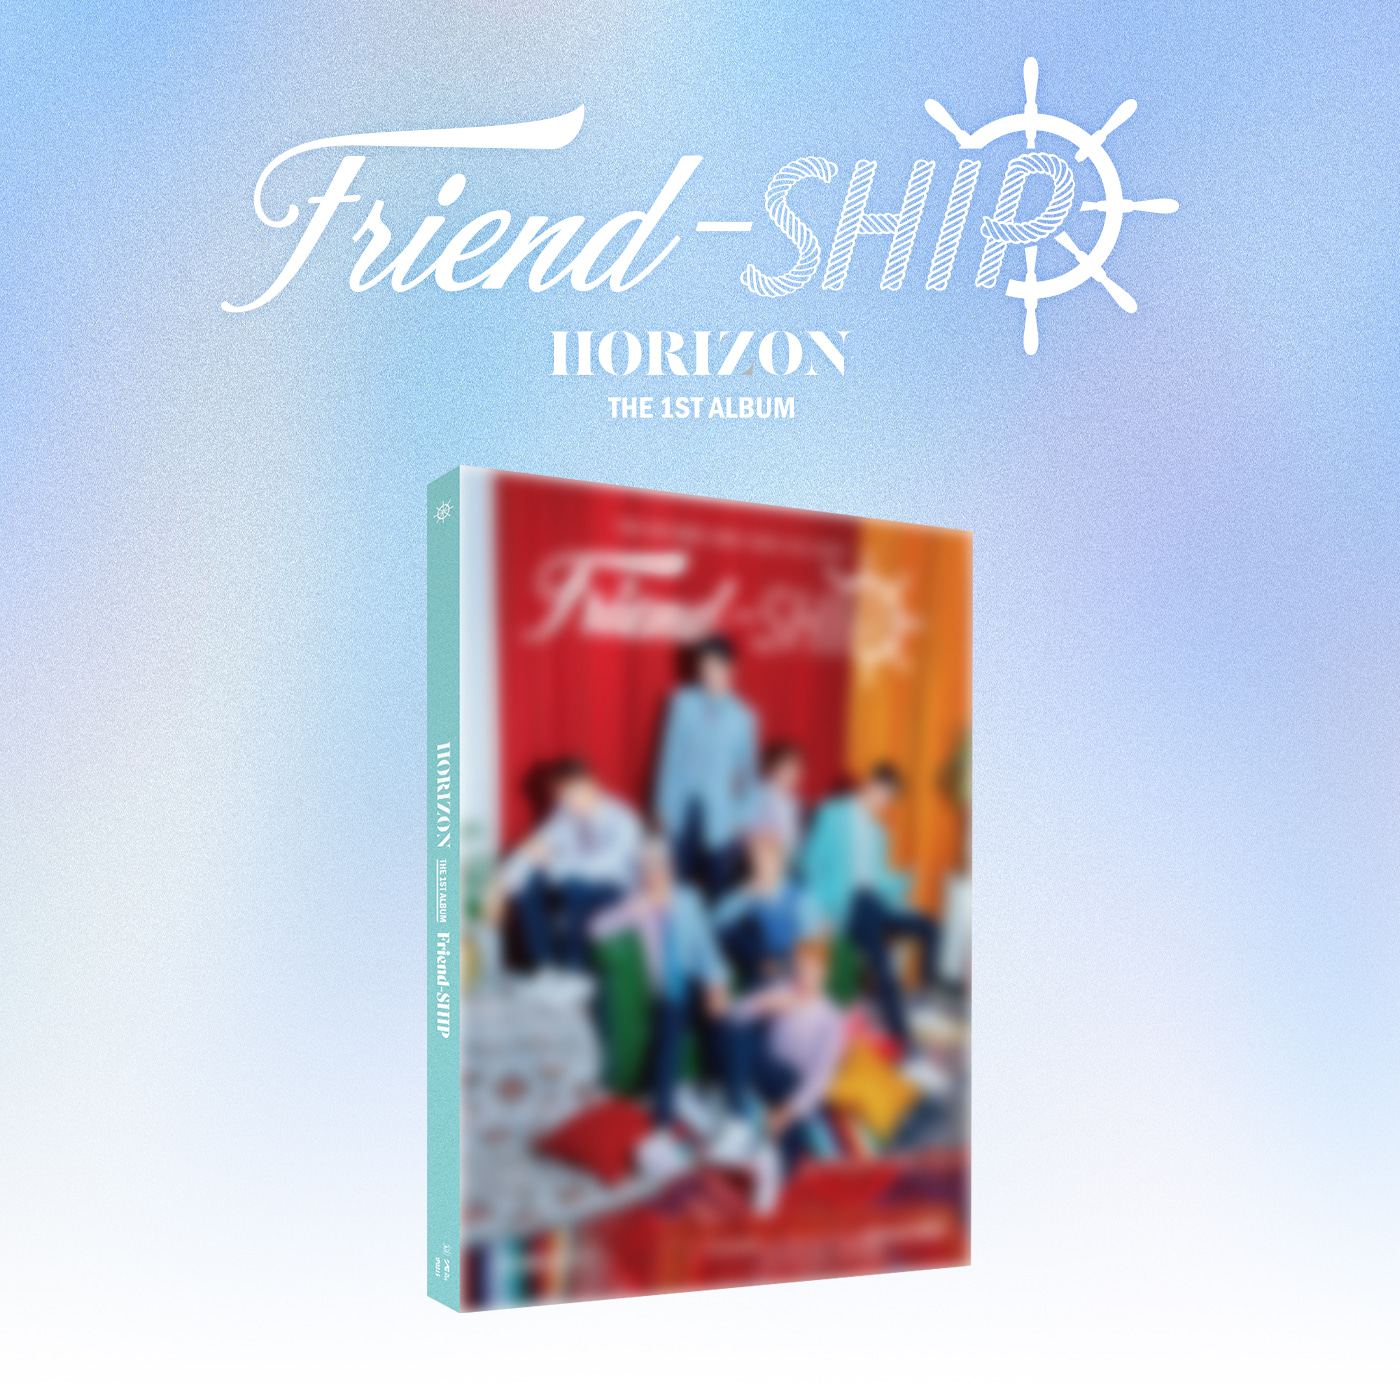 [A] HORI7ON (호라이즌) - Friend-SHIP (A VER)